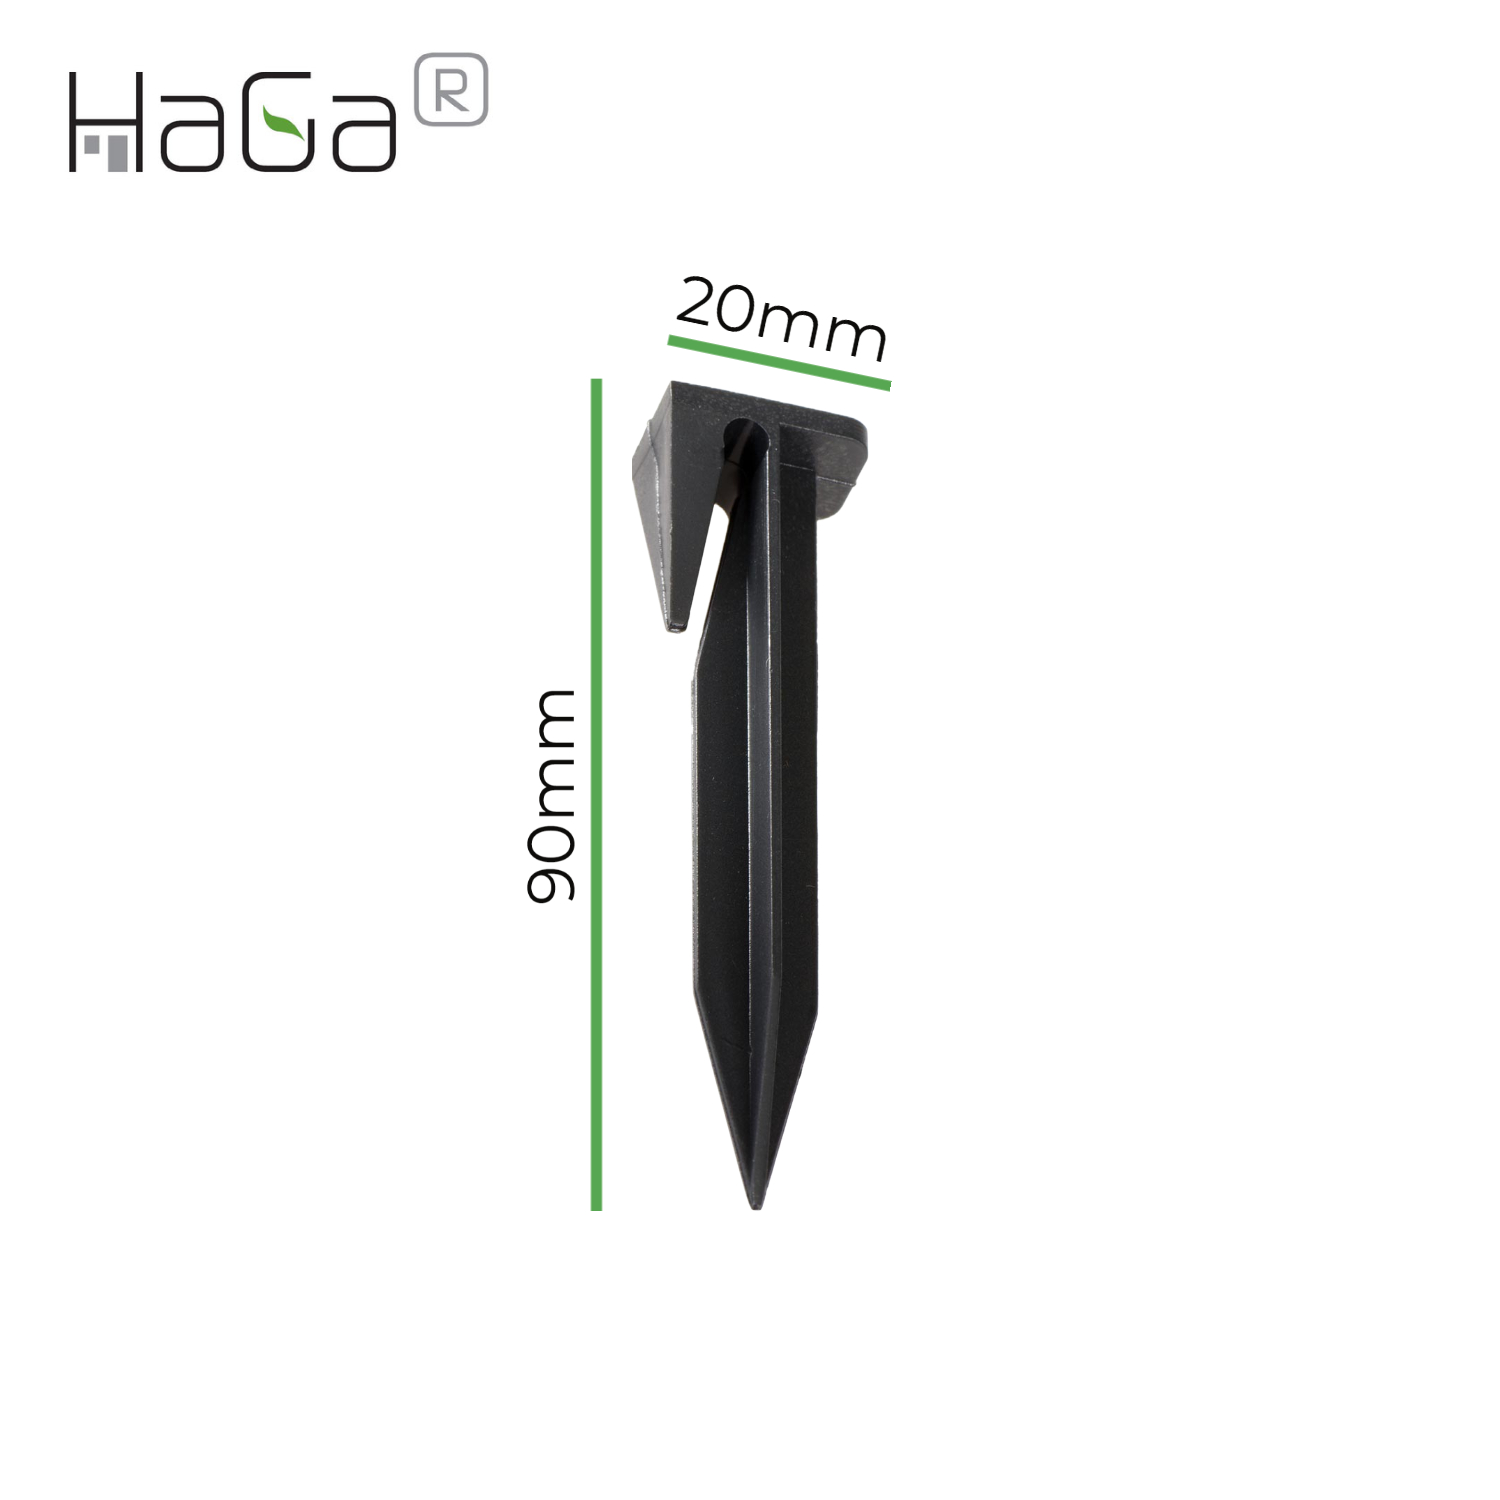 HaGa® Erdnägel für Mähroboter 50 Stück Begrenzugskabel-Erdhaken